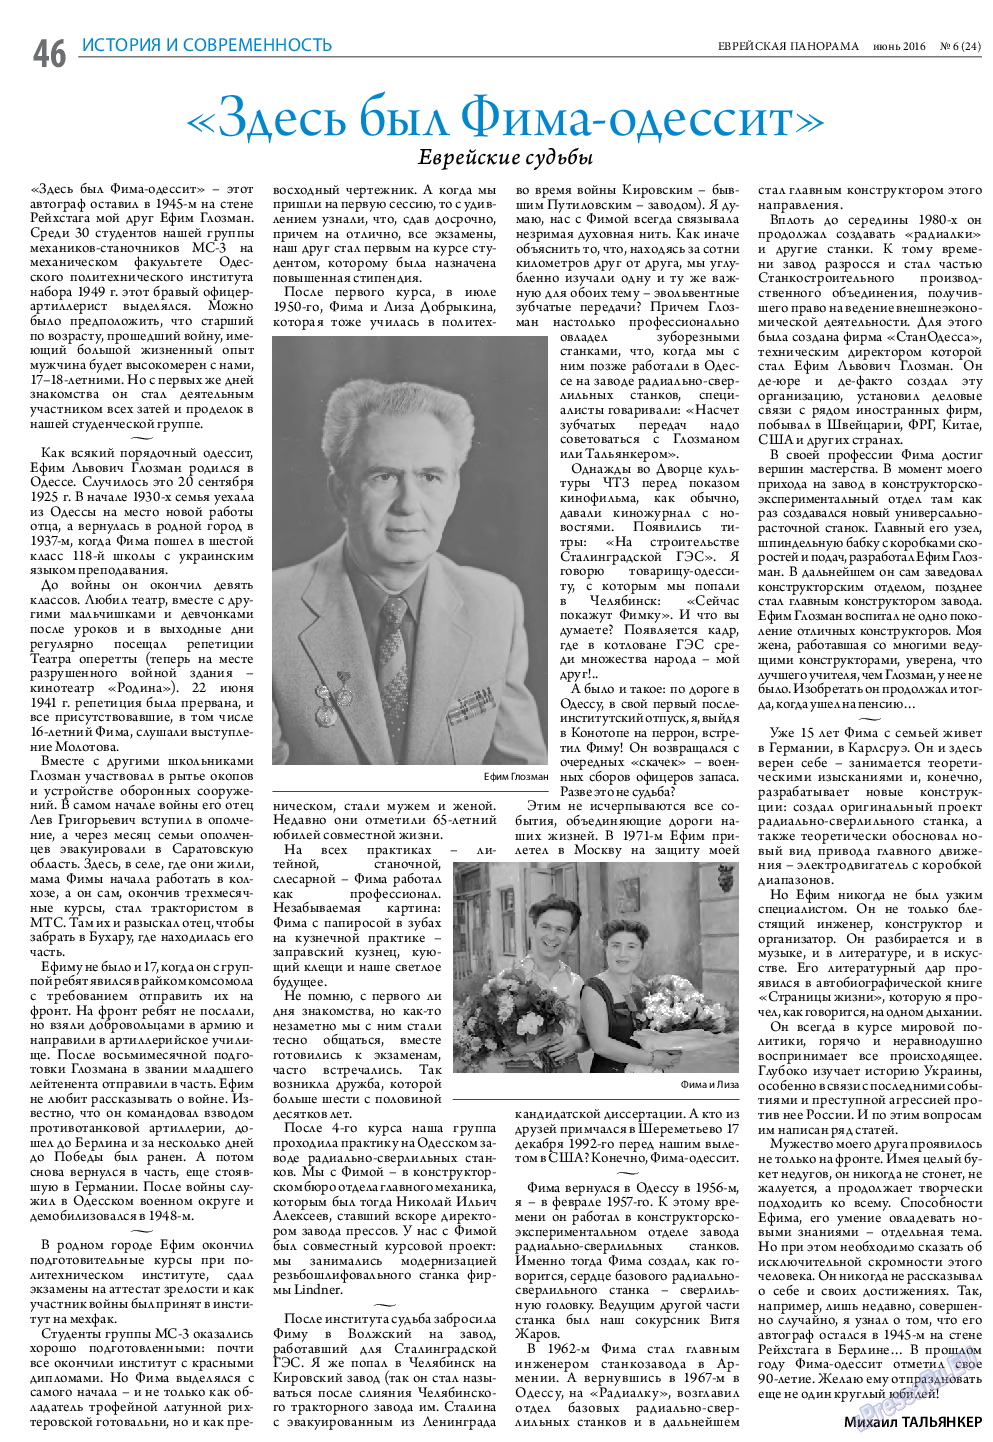 Еврейская панорама, газета. 2016 №6 стр.46